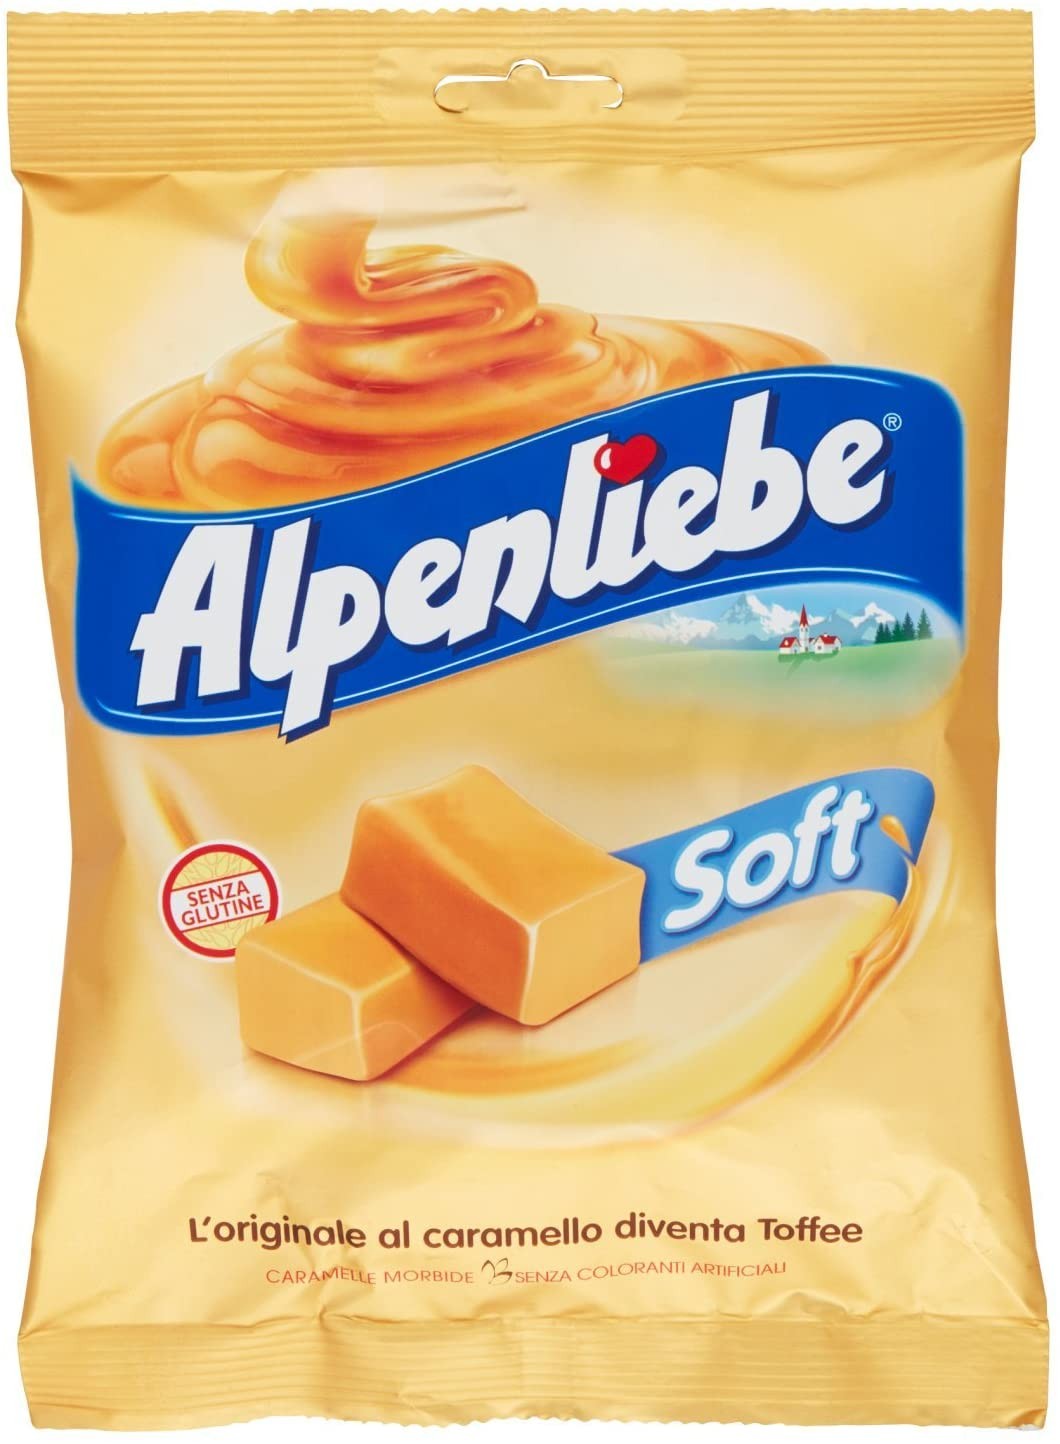 Alpenliebe Soft, Caramelle Moribide Gusto Original Caramel, Caramella Toffee al Caramello, Confezione da 6 buste da 150 gr, Senz